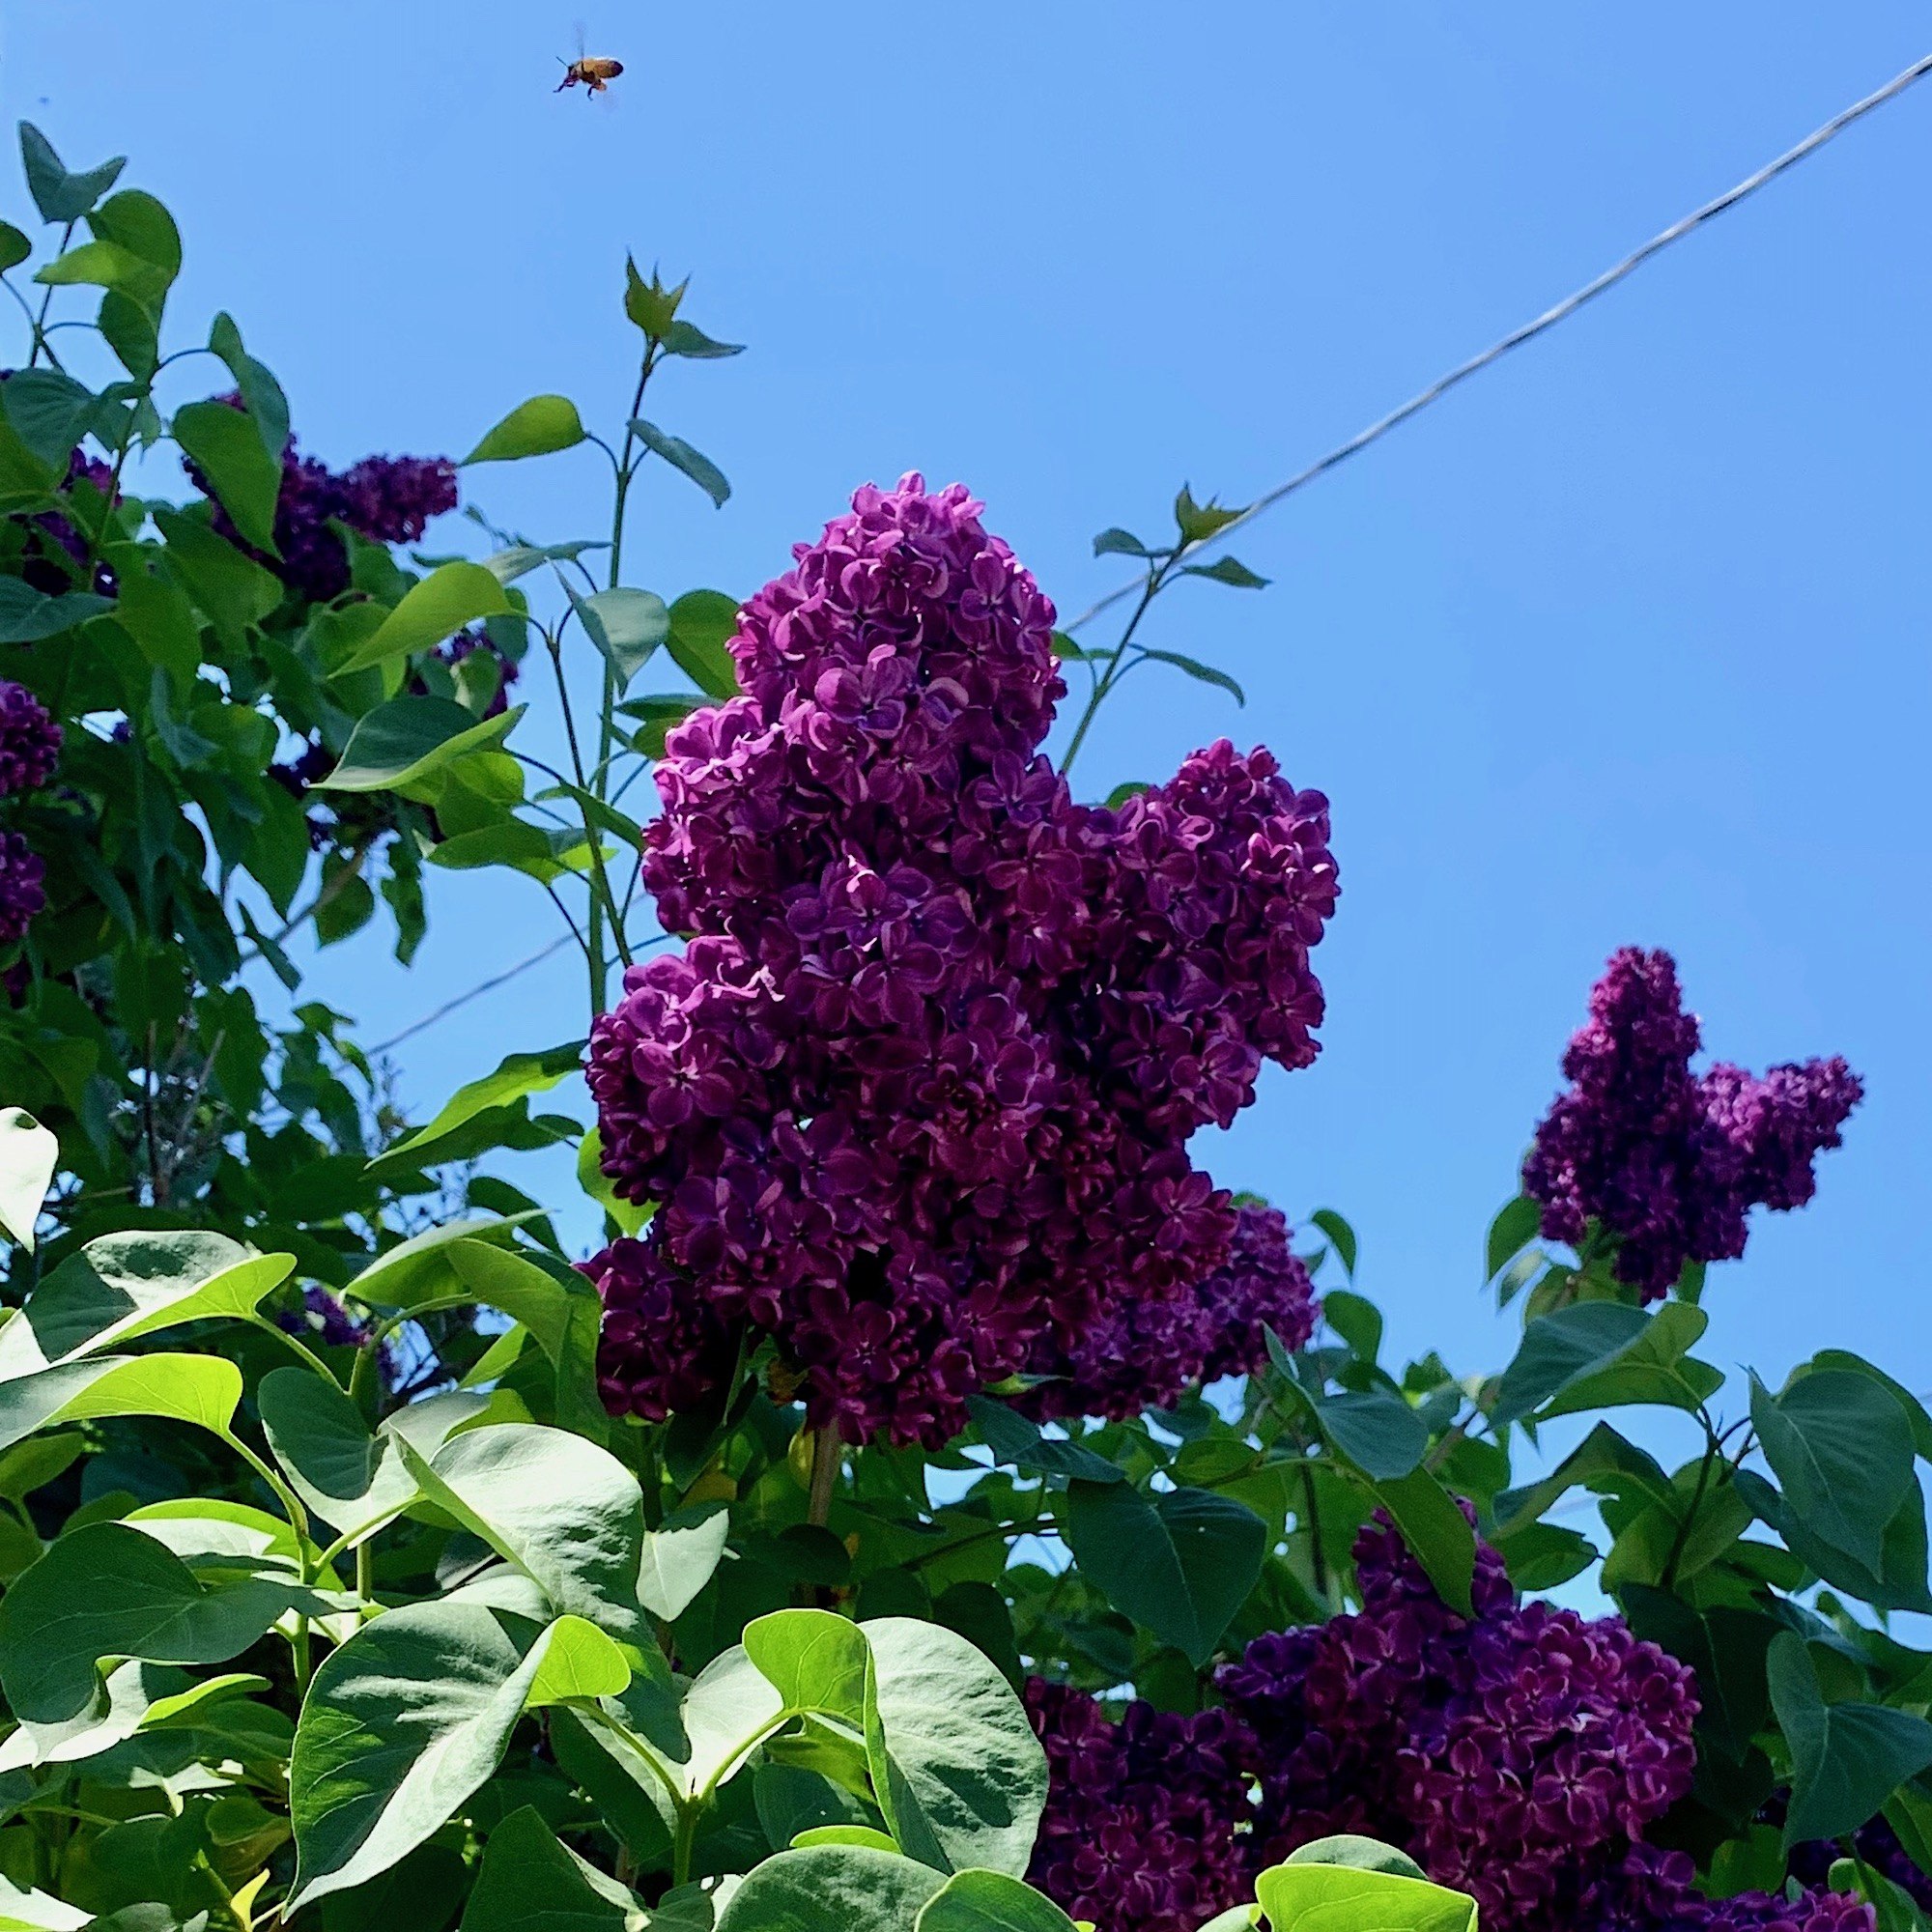 Northampton, MA lilacs - May 2020 - bee flying - photo - LBern